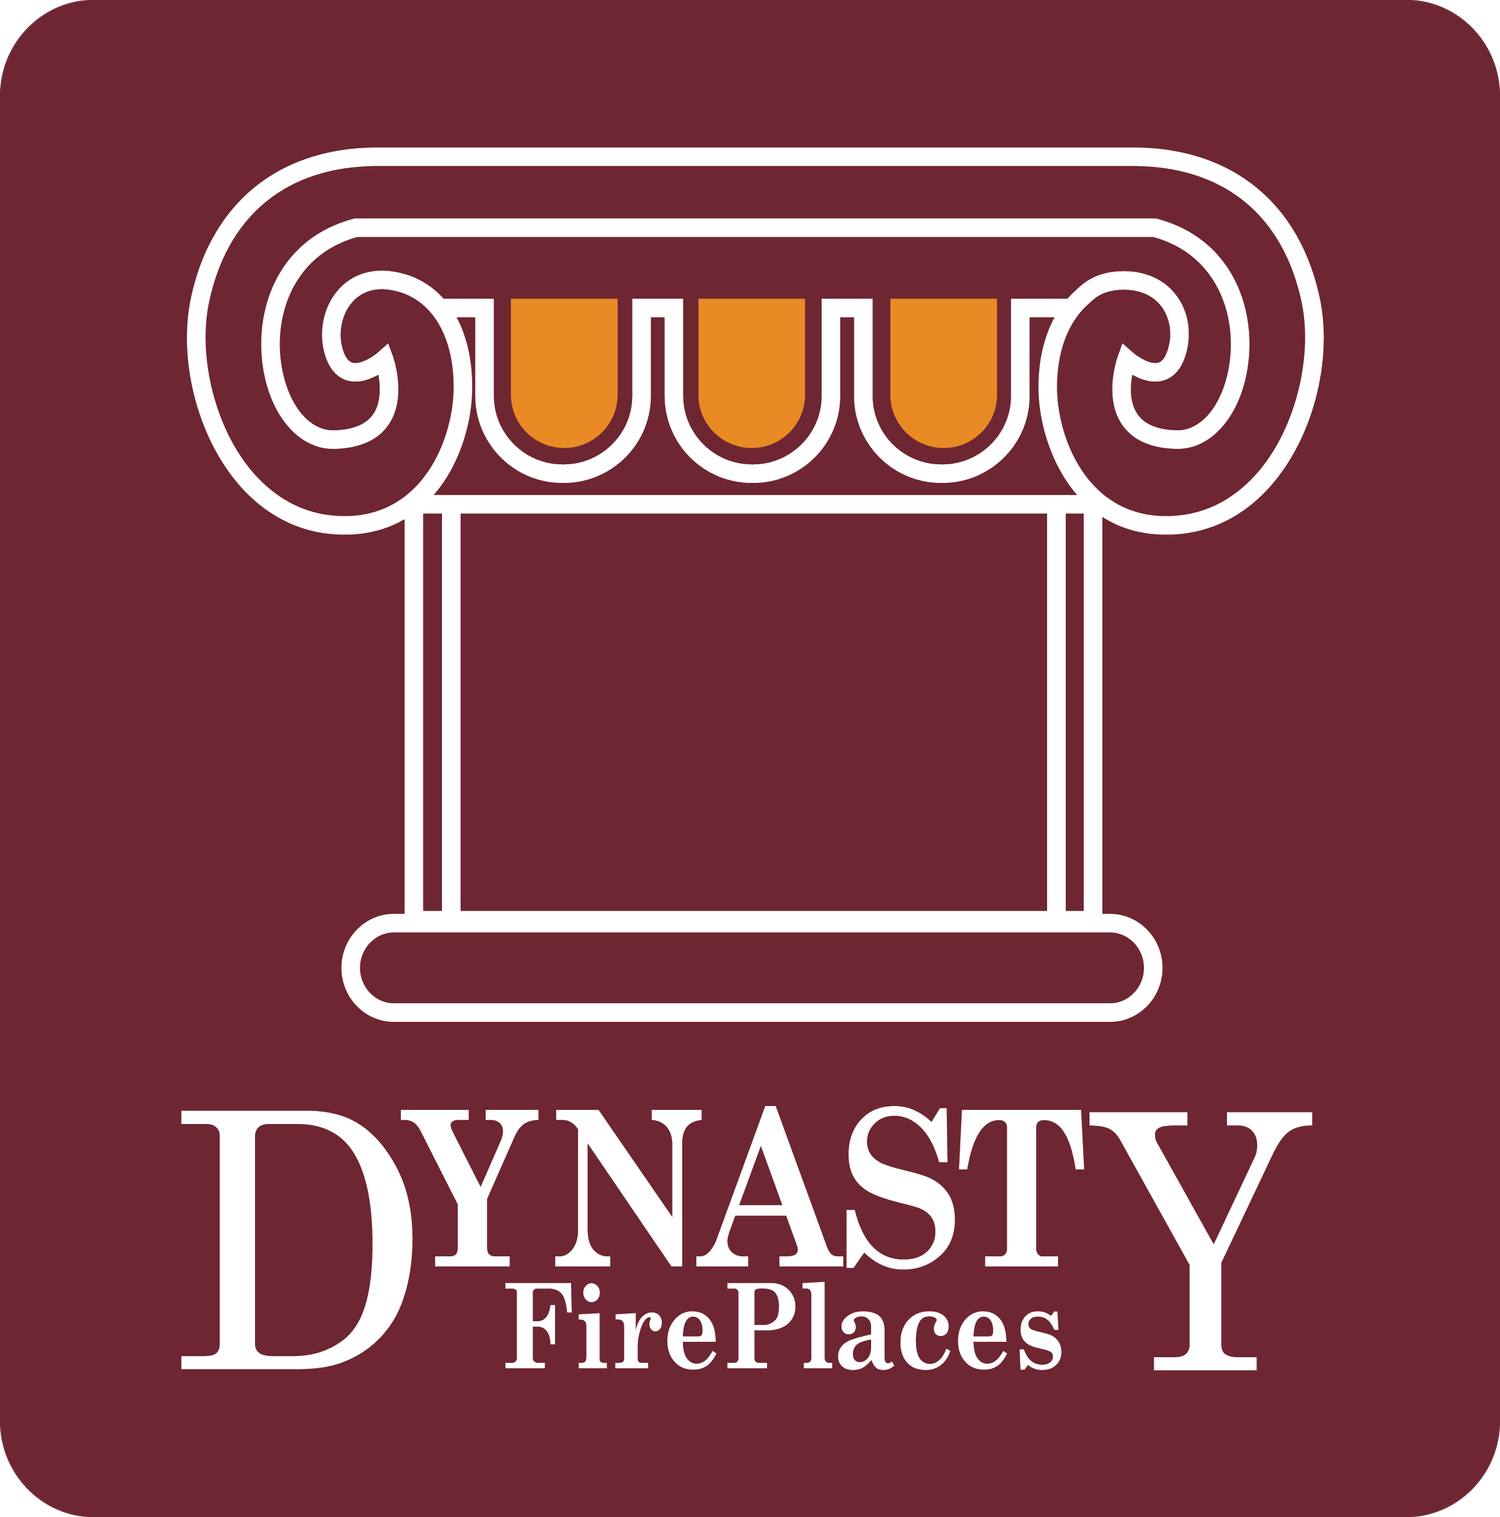 Dynasty Fireplaces